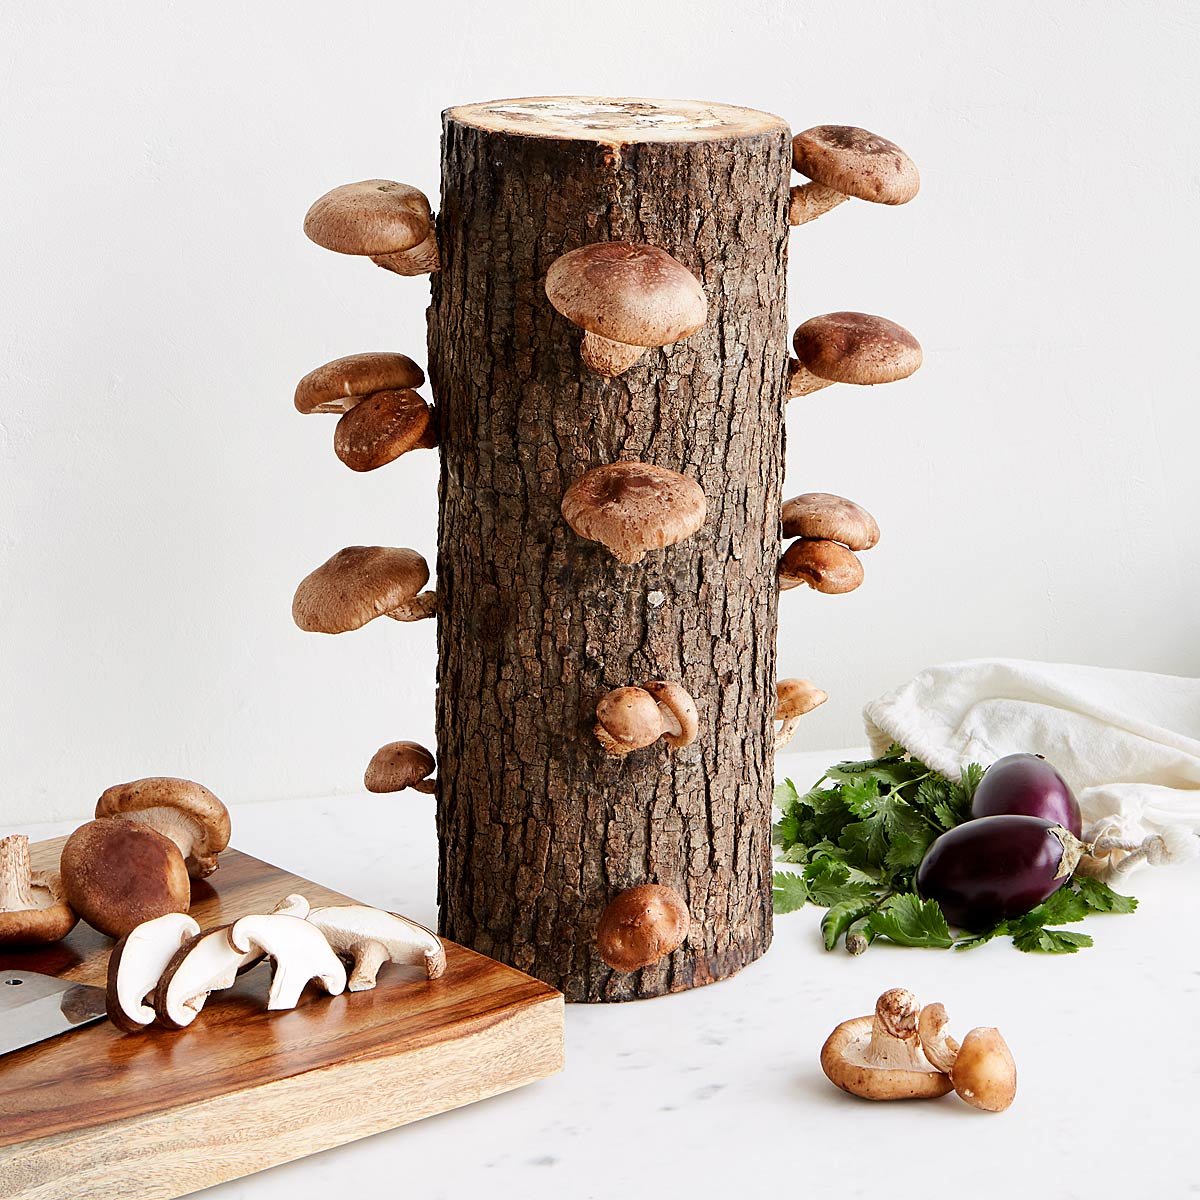 So Easy! 18/' Mushroom Log Pre Inoculated Shiitake Gourmet Edible Amazing food from your Back Yard